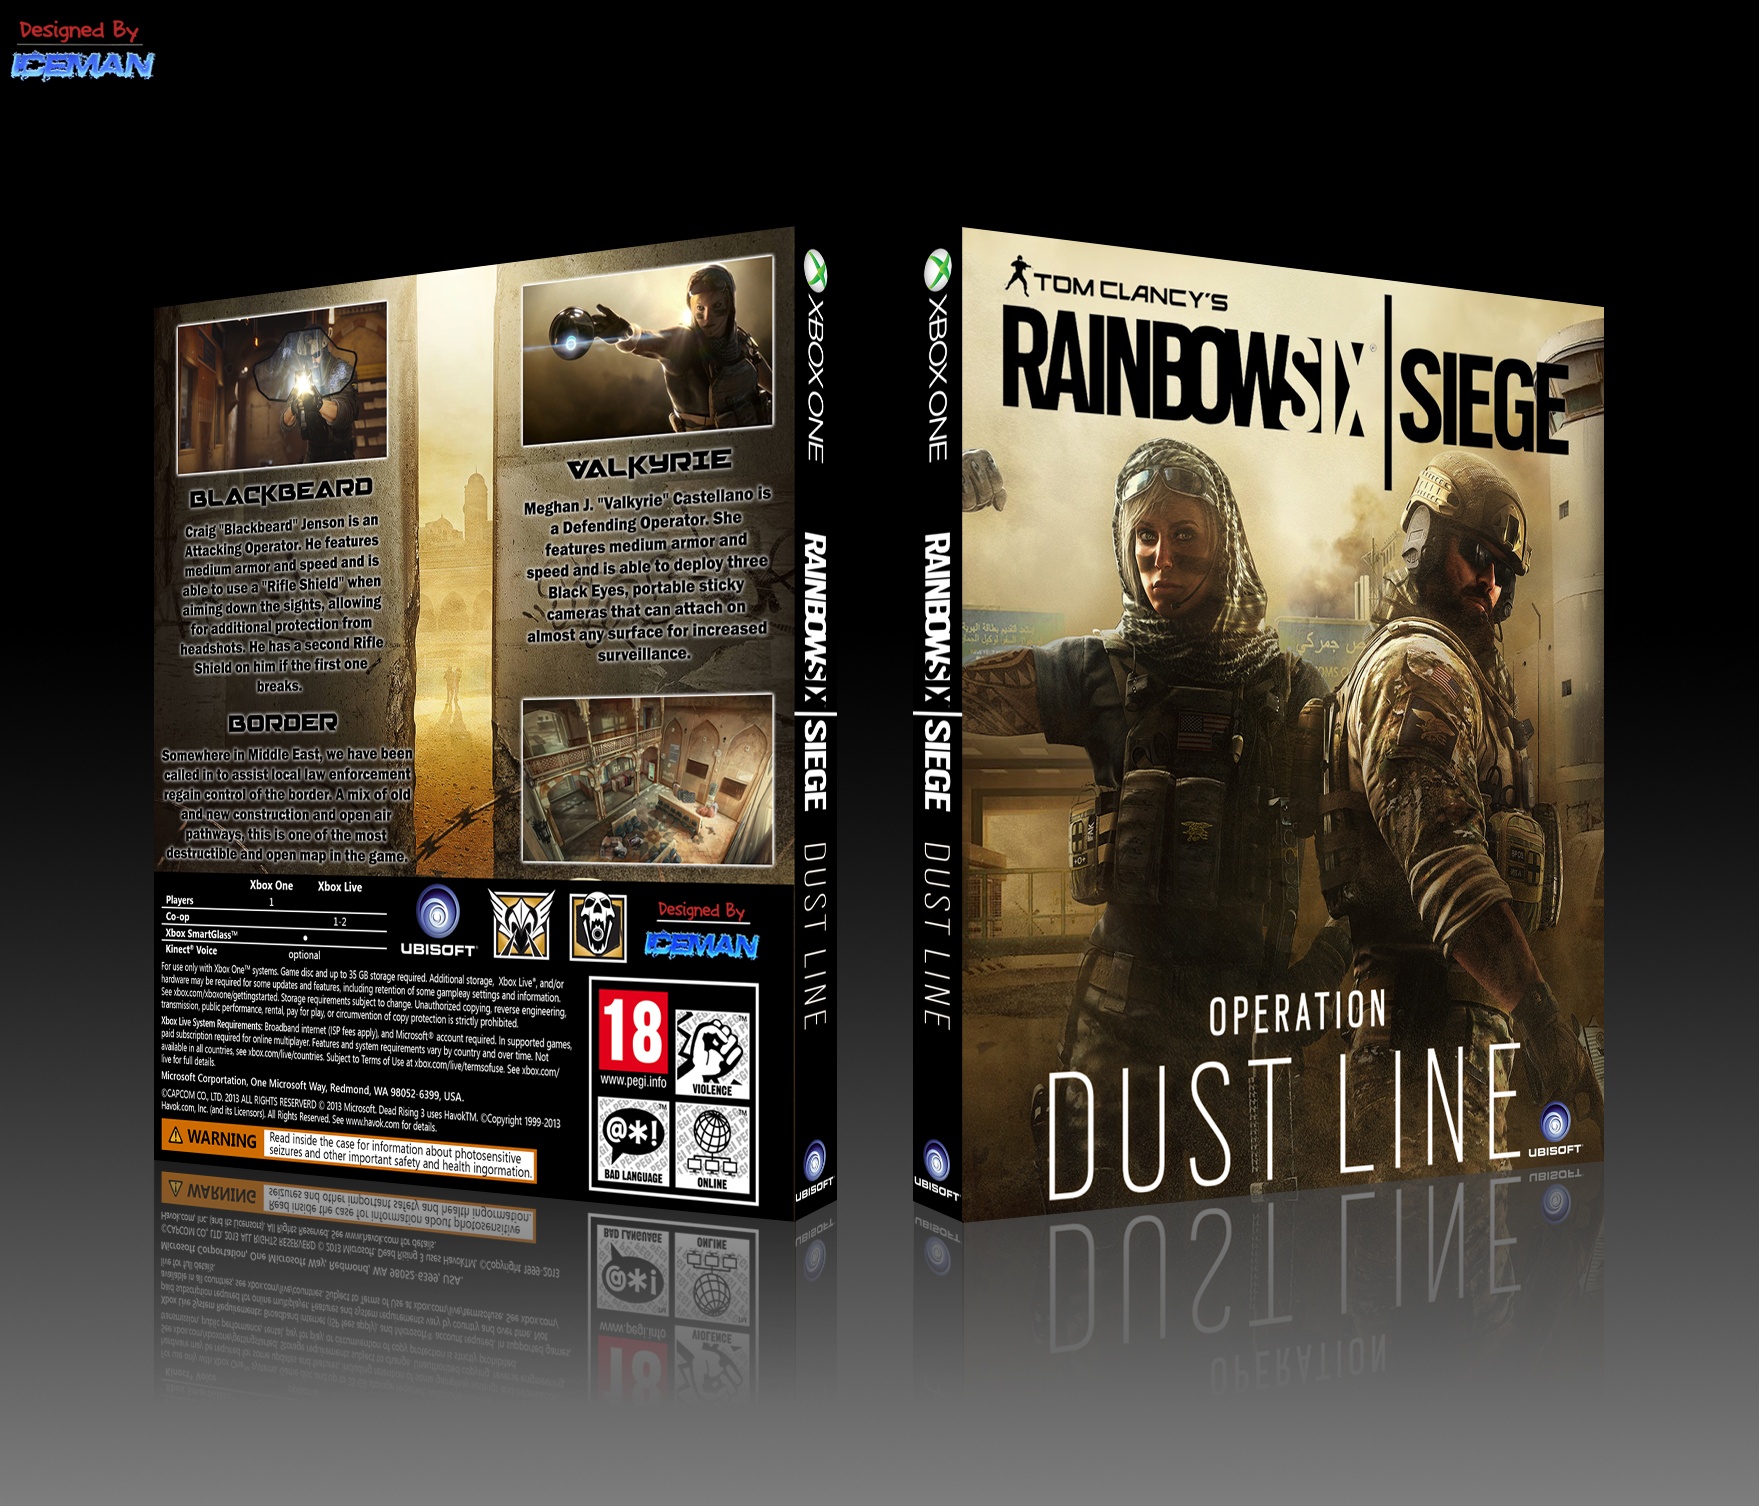 Tom Clancy's Rainbow Six: Siege box cover